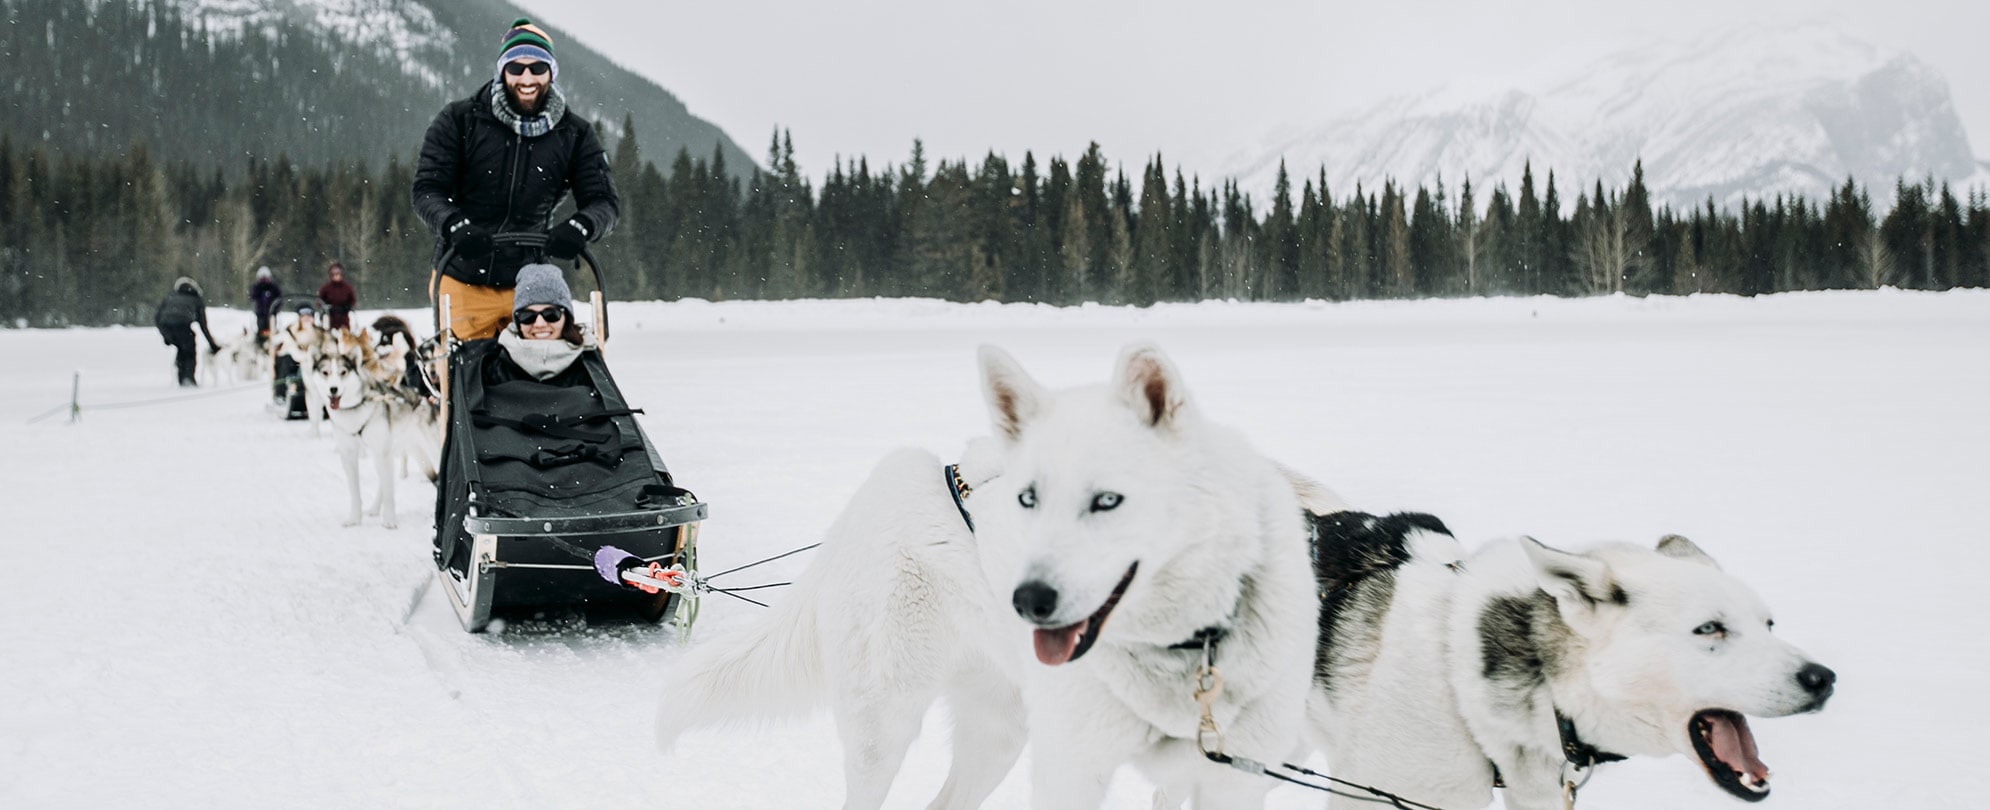 People dog sledding through the snow in Alaska.